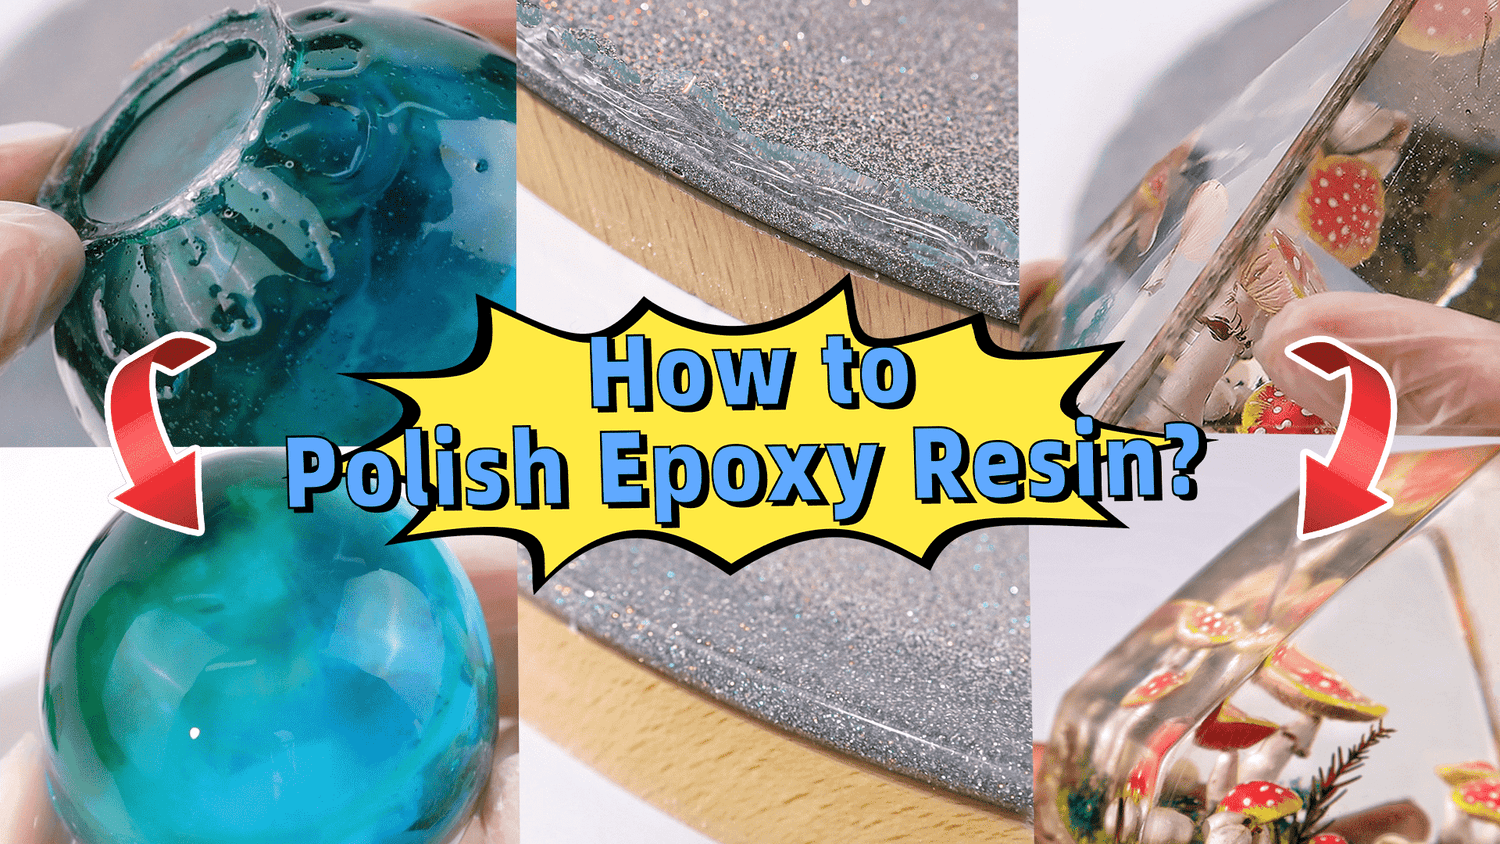 How to Polish Epoxy Resin